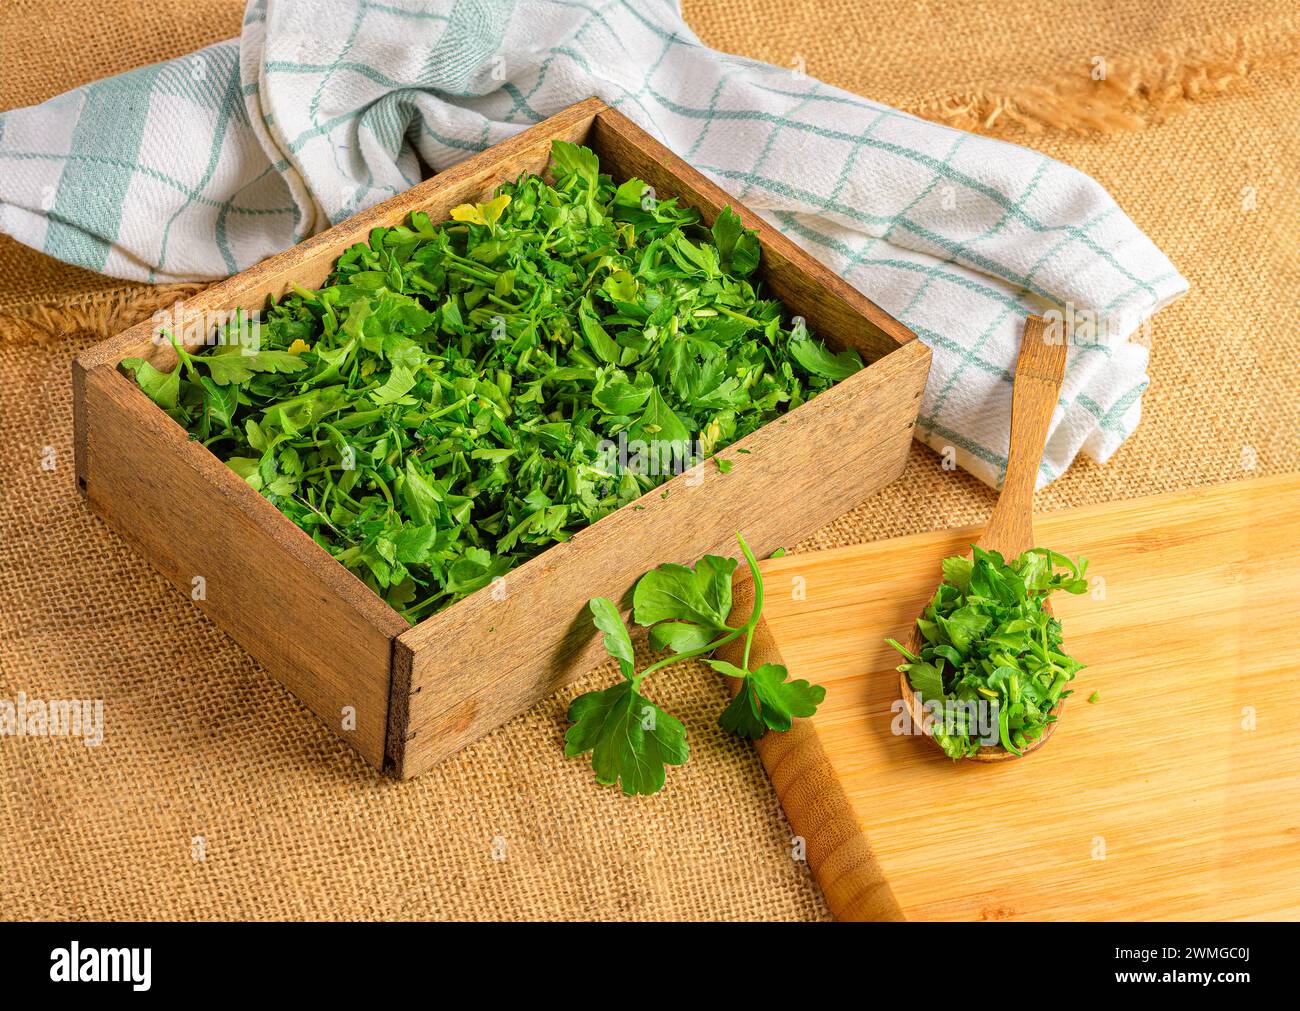 The Organic Inspiration: Wooden Utensils and Fresh Herbs Stock Photo